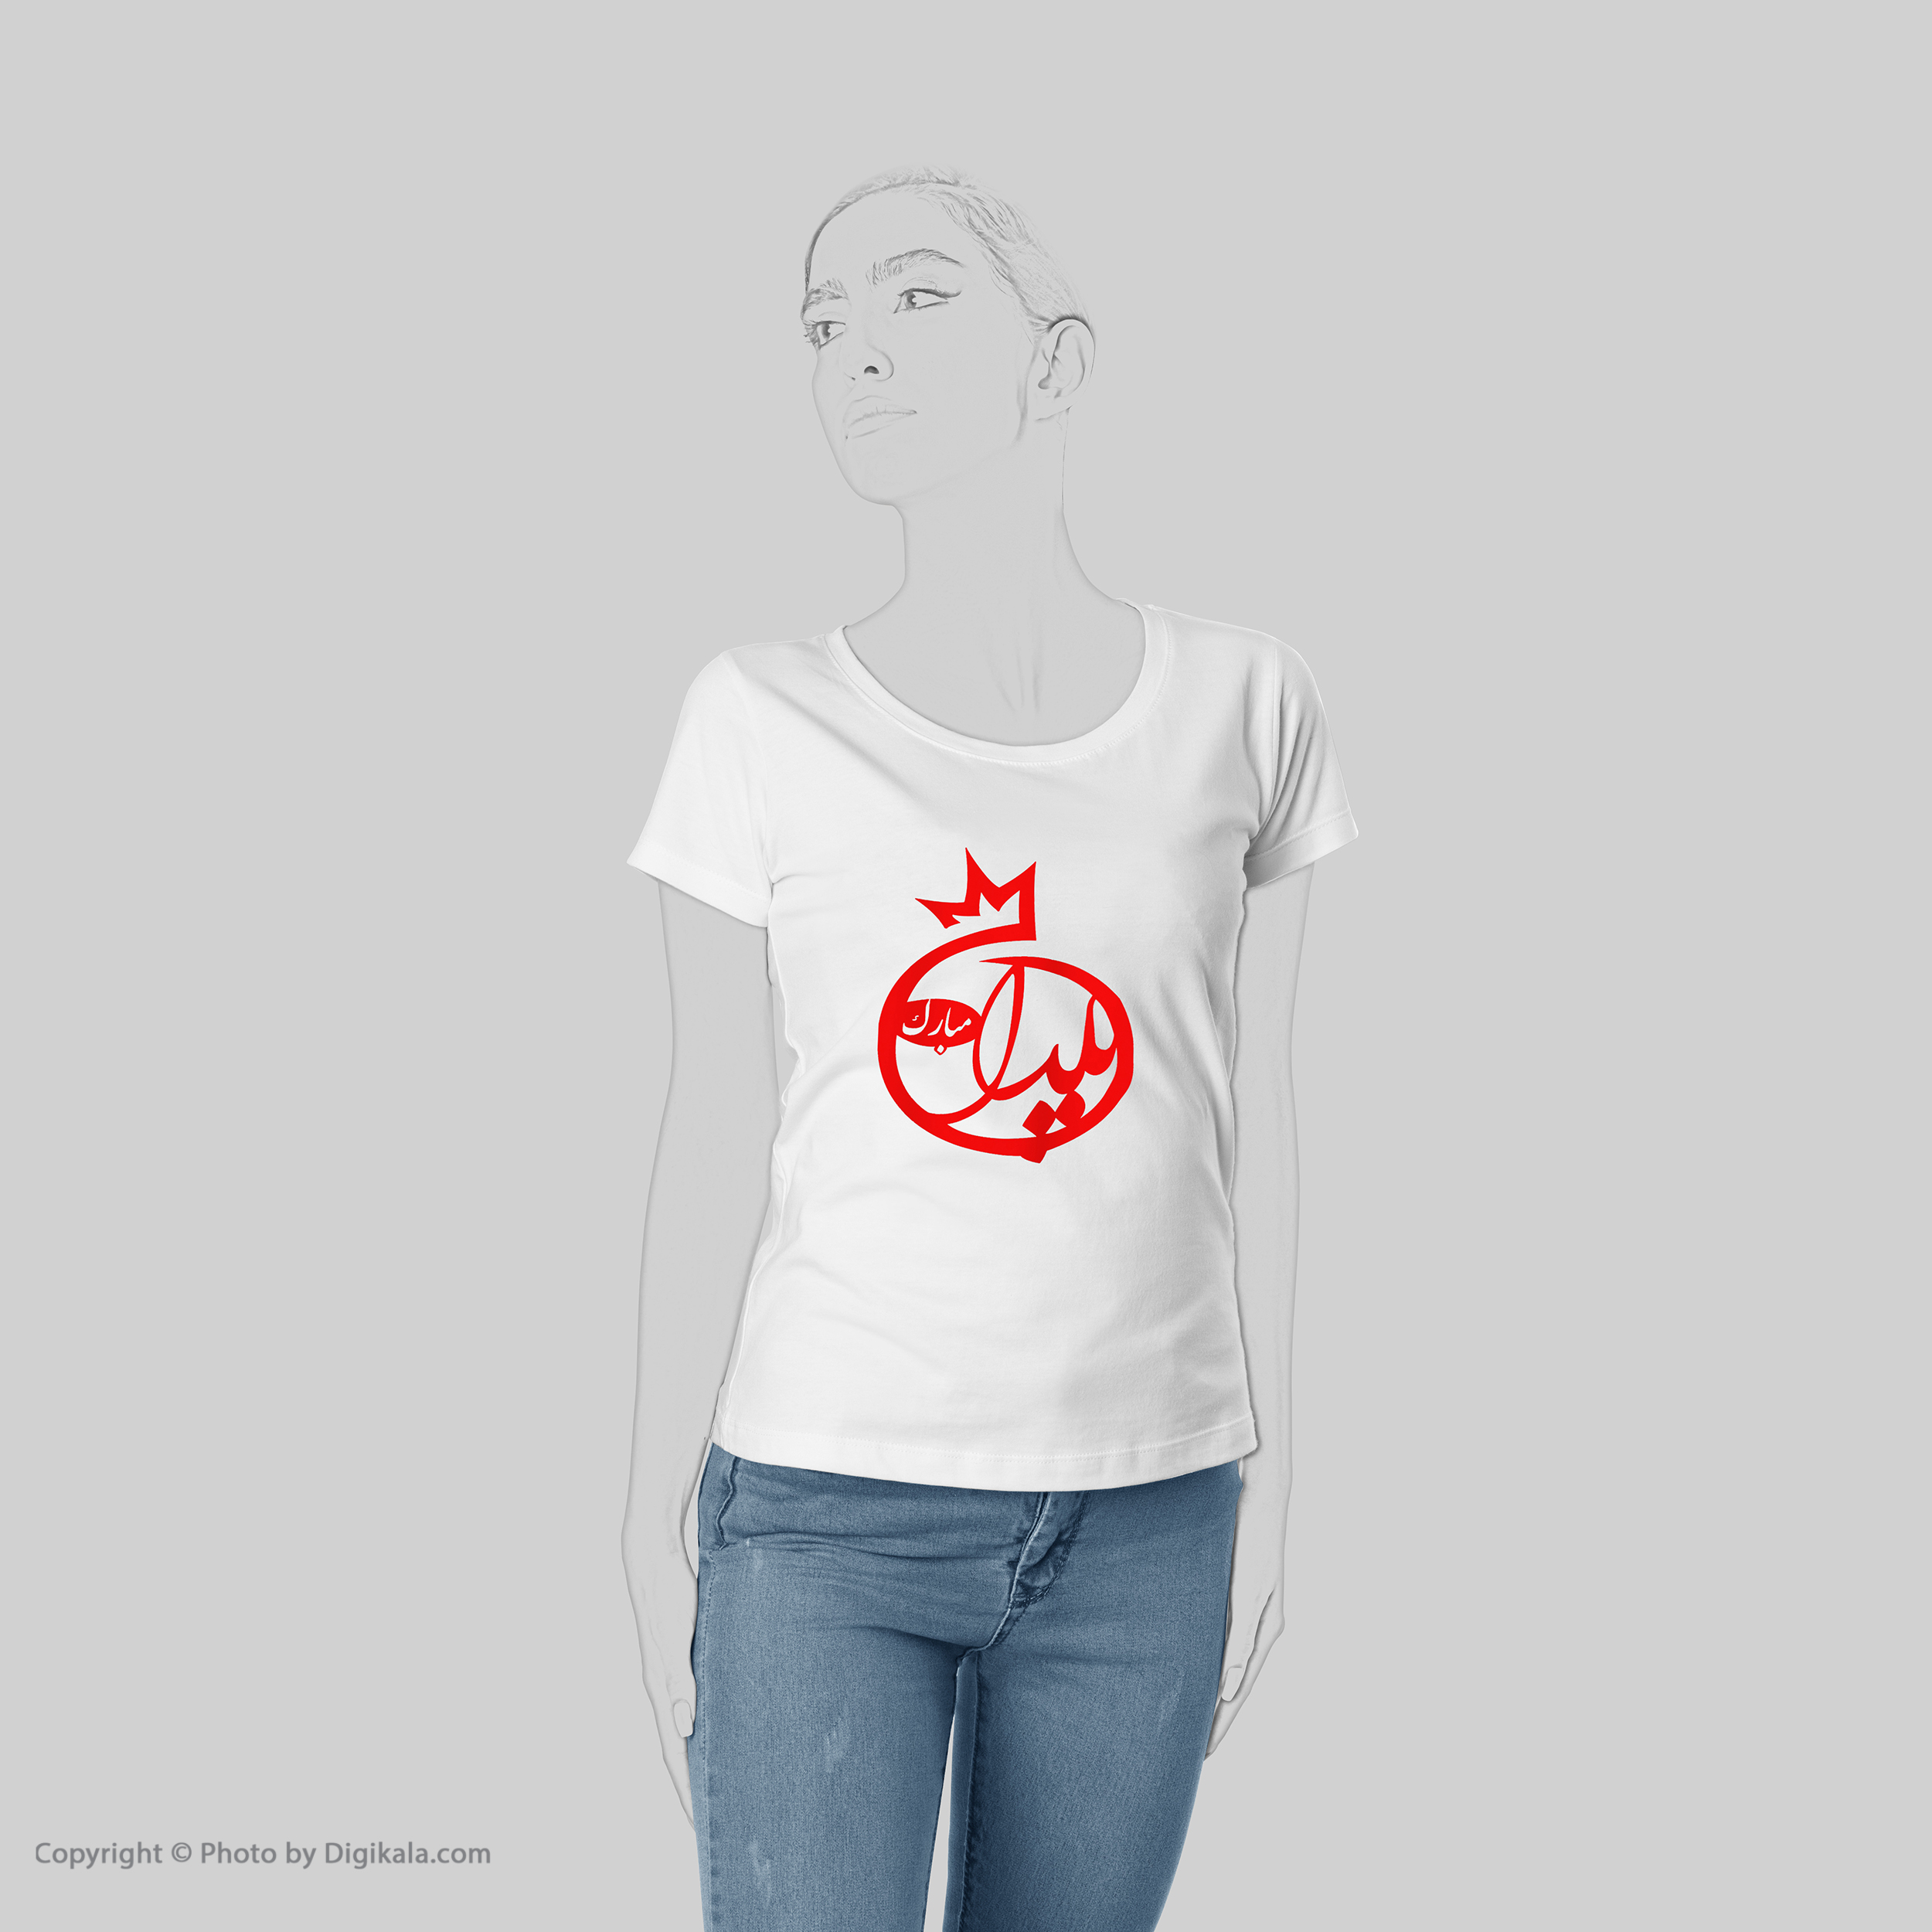 تی شرت زنانه به رسم طرح یلدا کد 5560 -  - 5